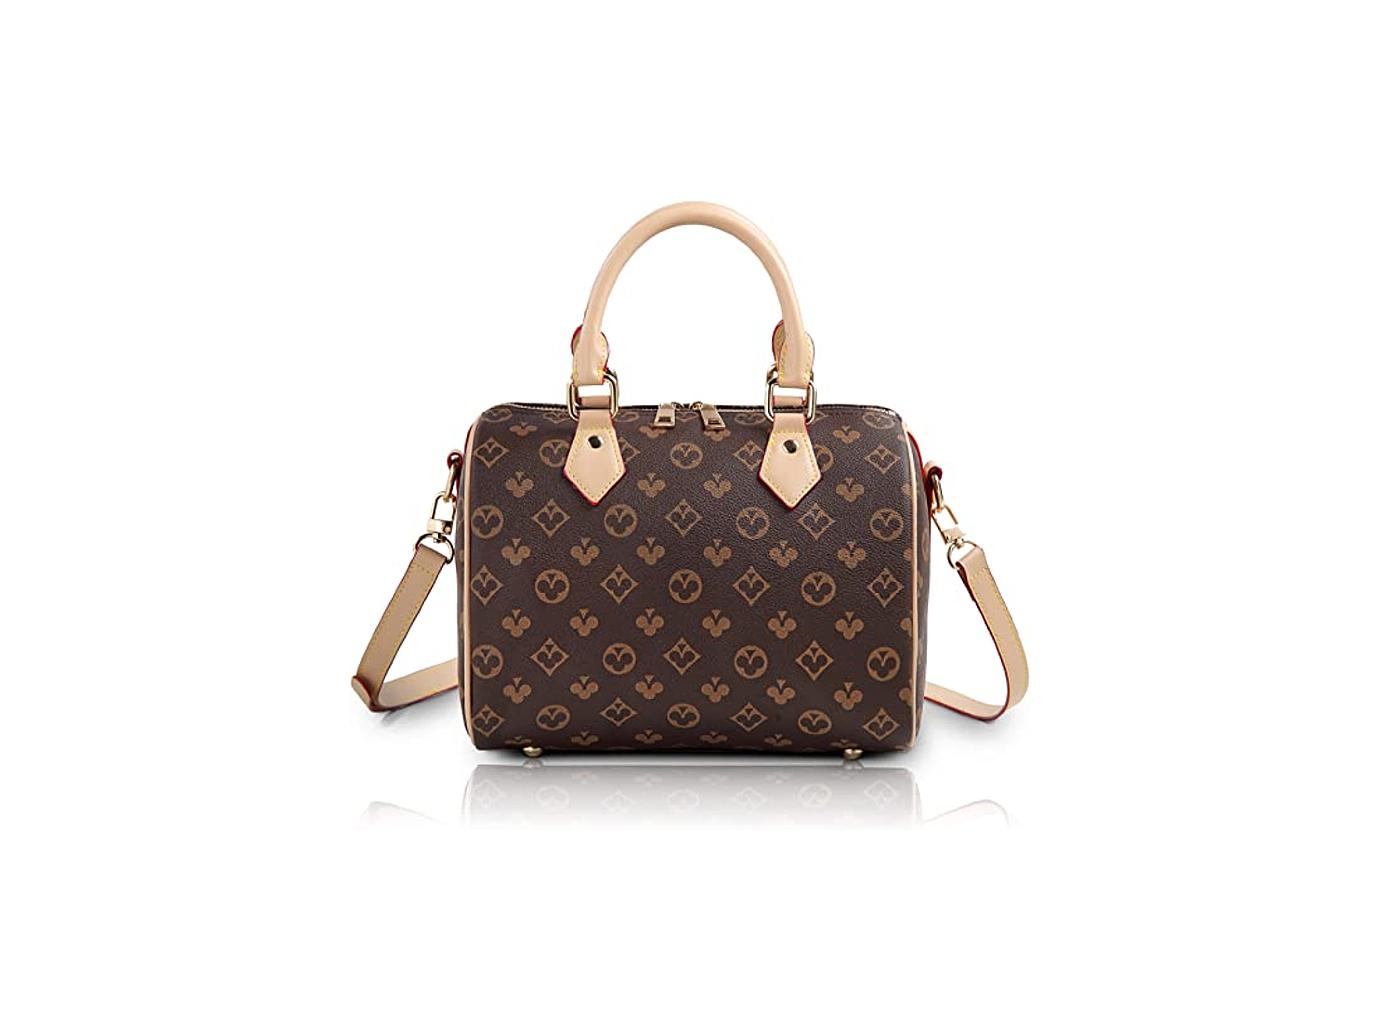 Khloe Kardashian recycles Kim's old Louis Vuitton bag and she's